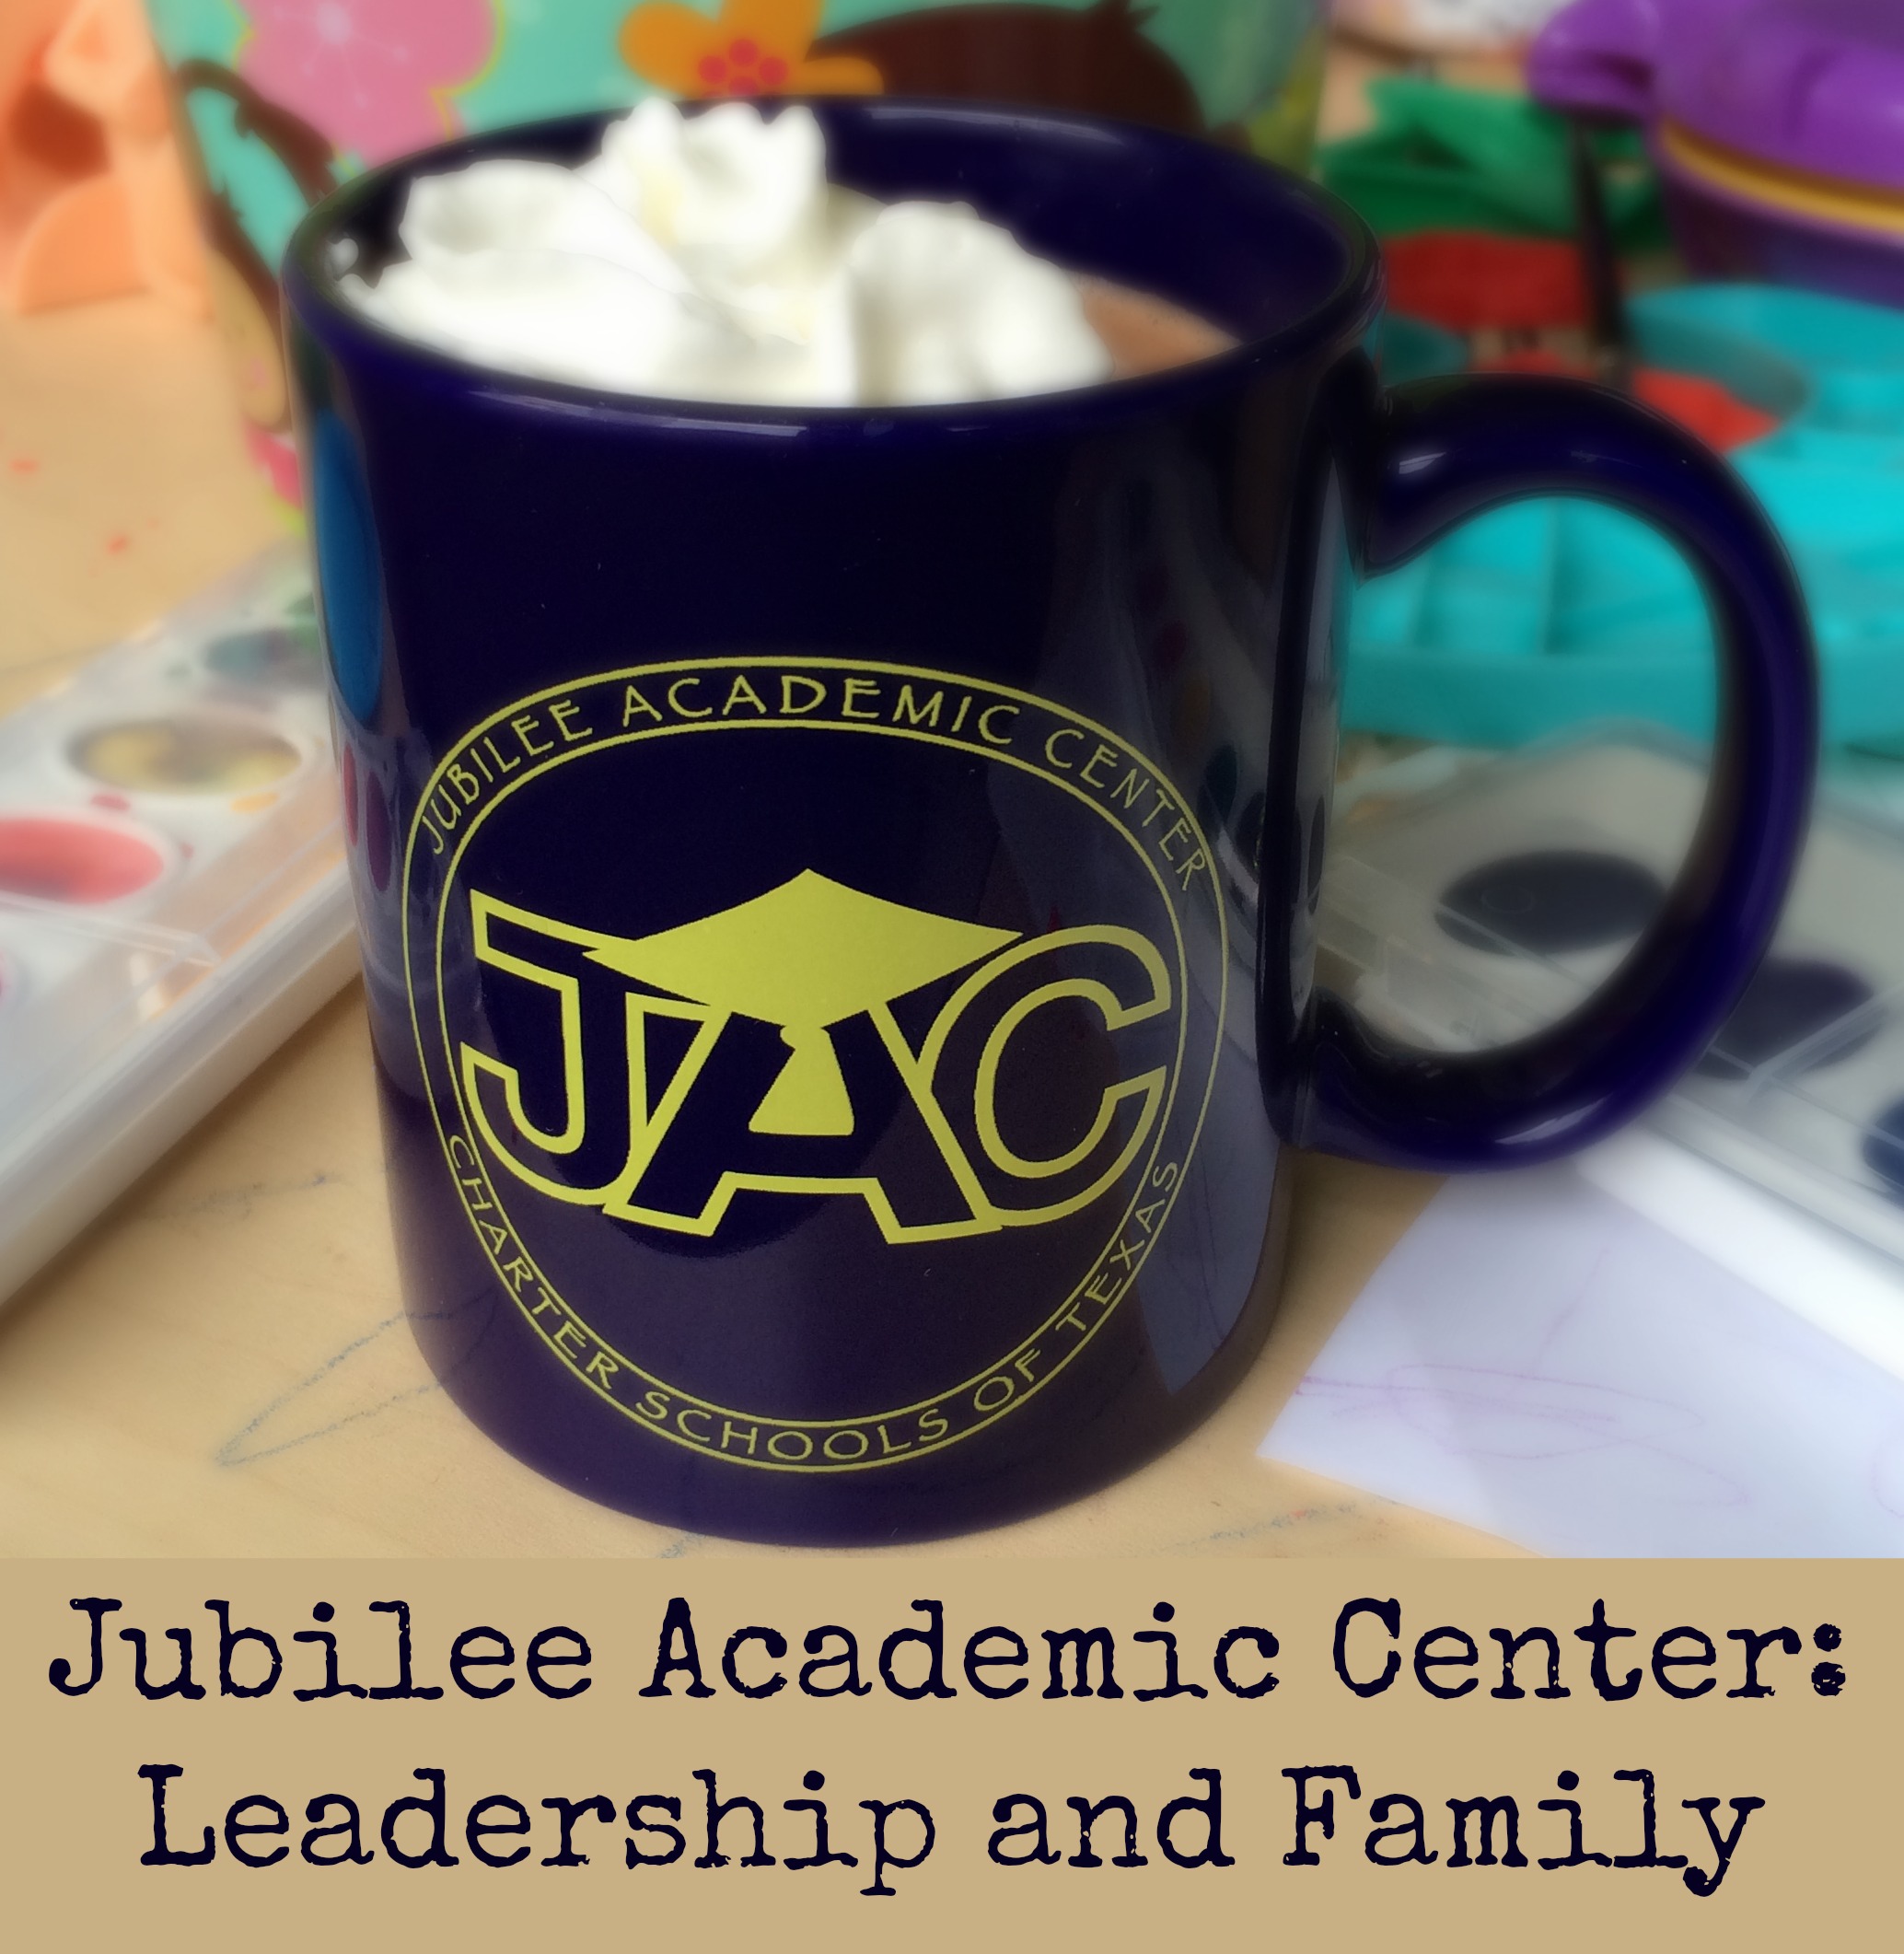 Jubilee Academic Center teaches leadership skills in a family environment | San Antonio Charter Moms